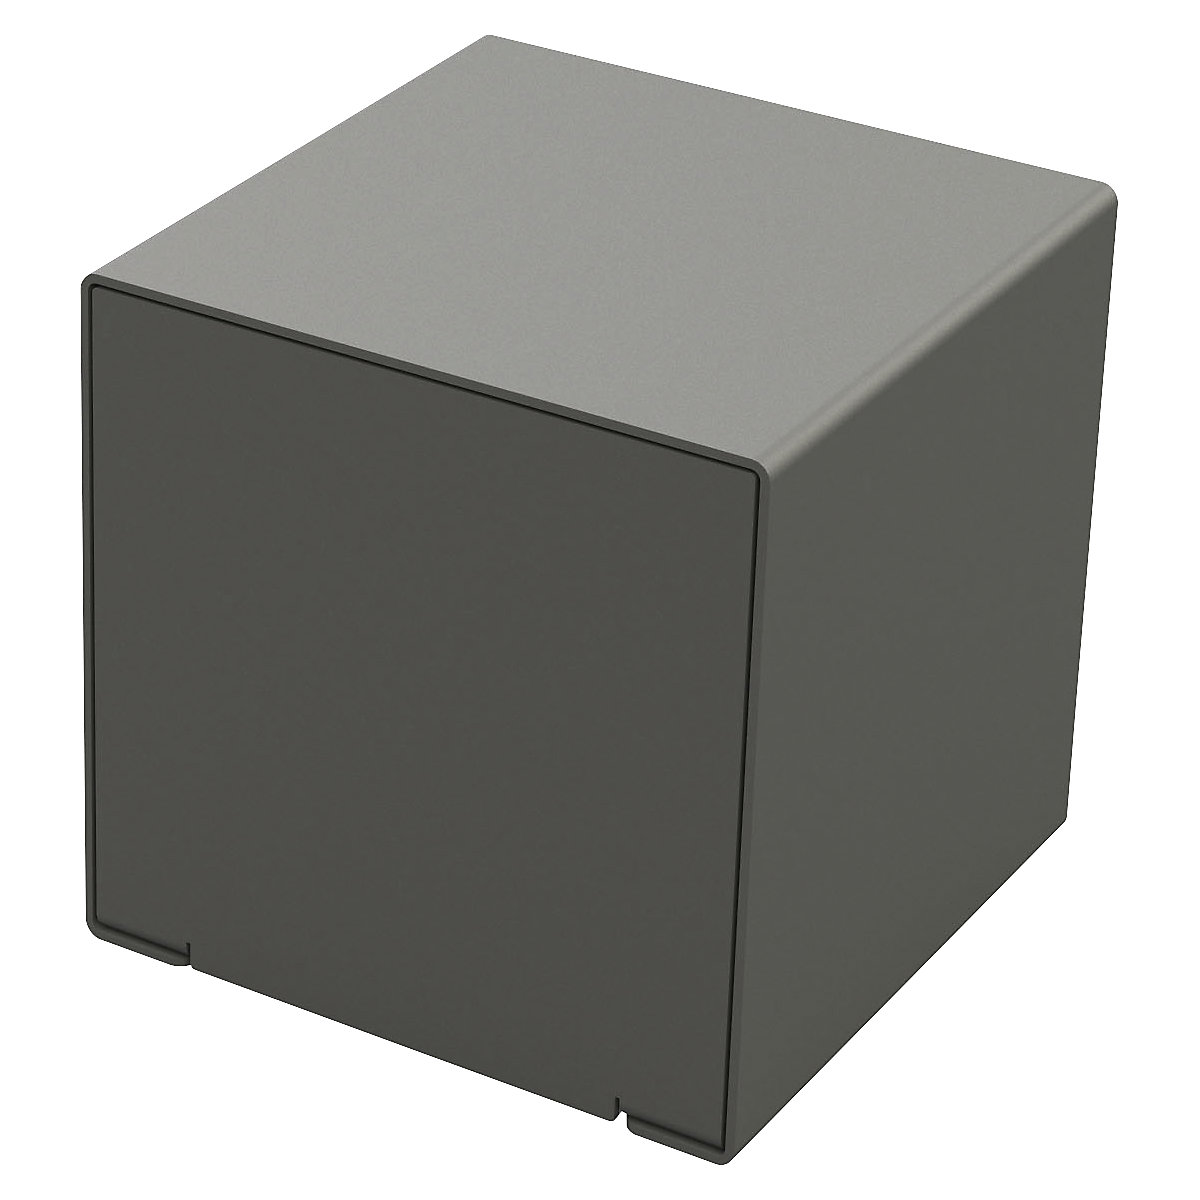 KUBE cube seat made of steel – PROCITY